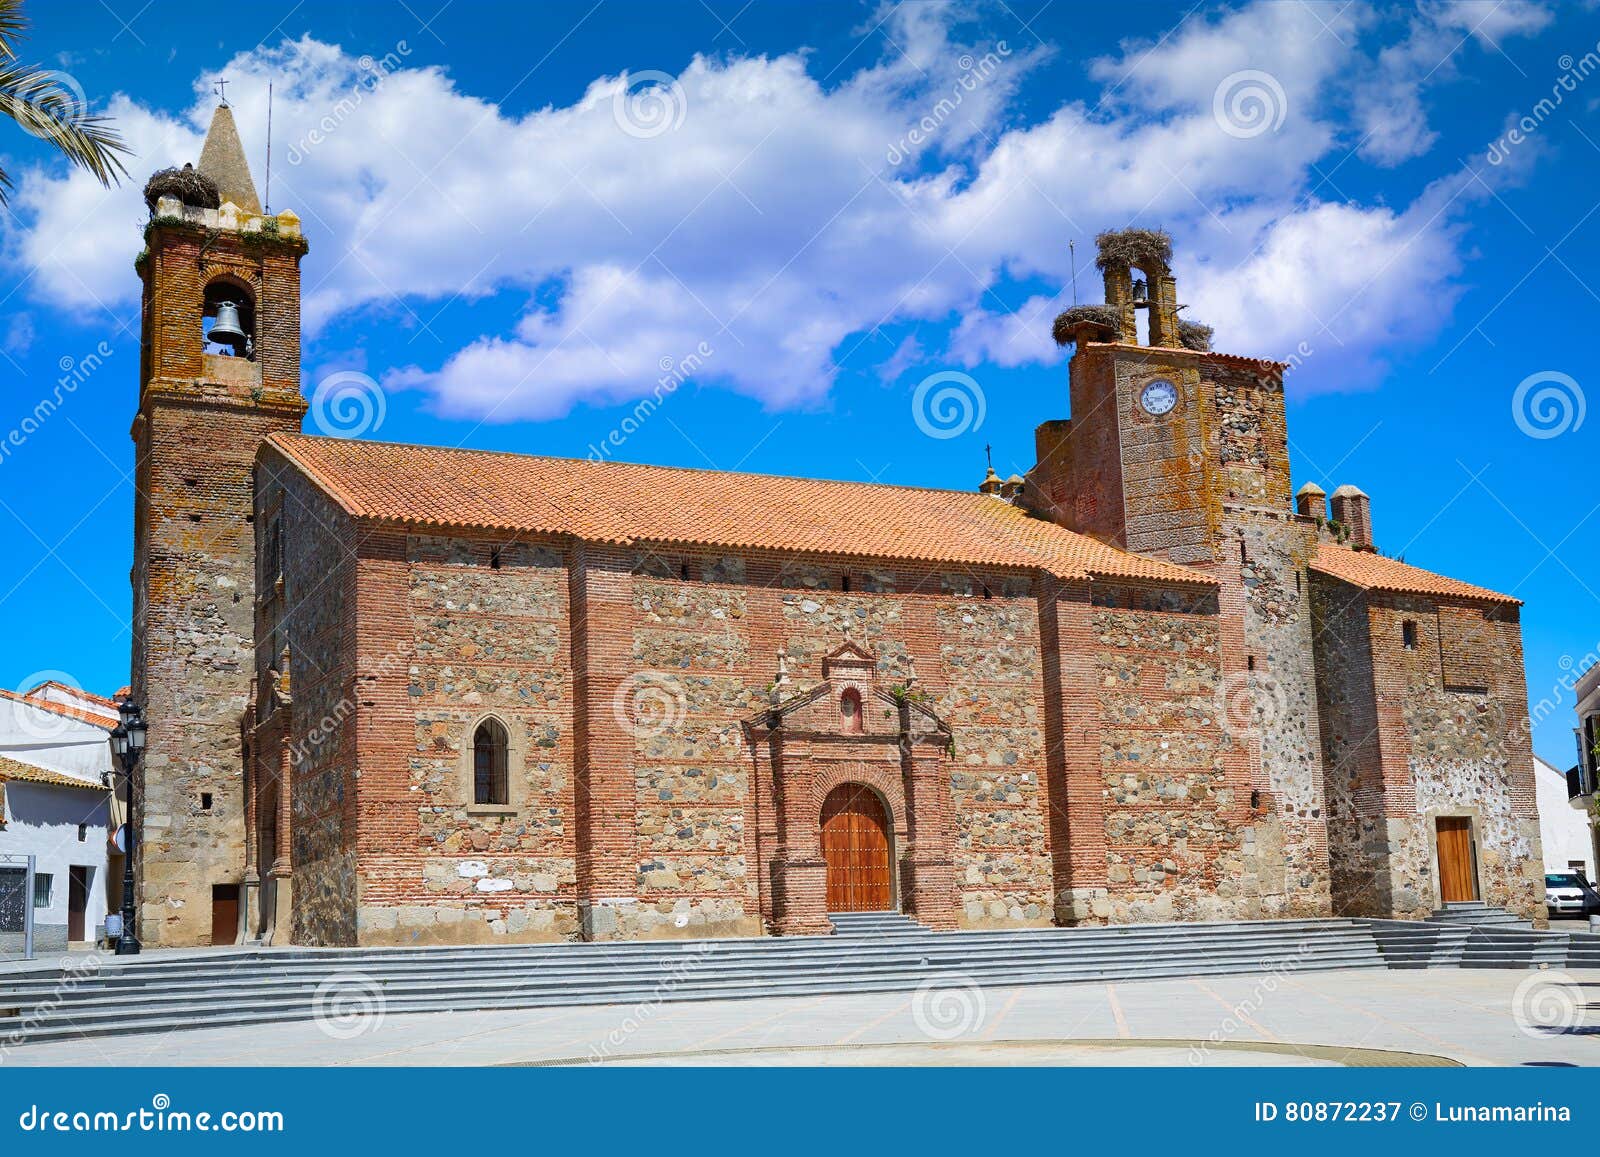 monasterio church san pedro apostol spain